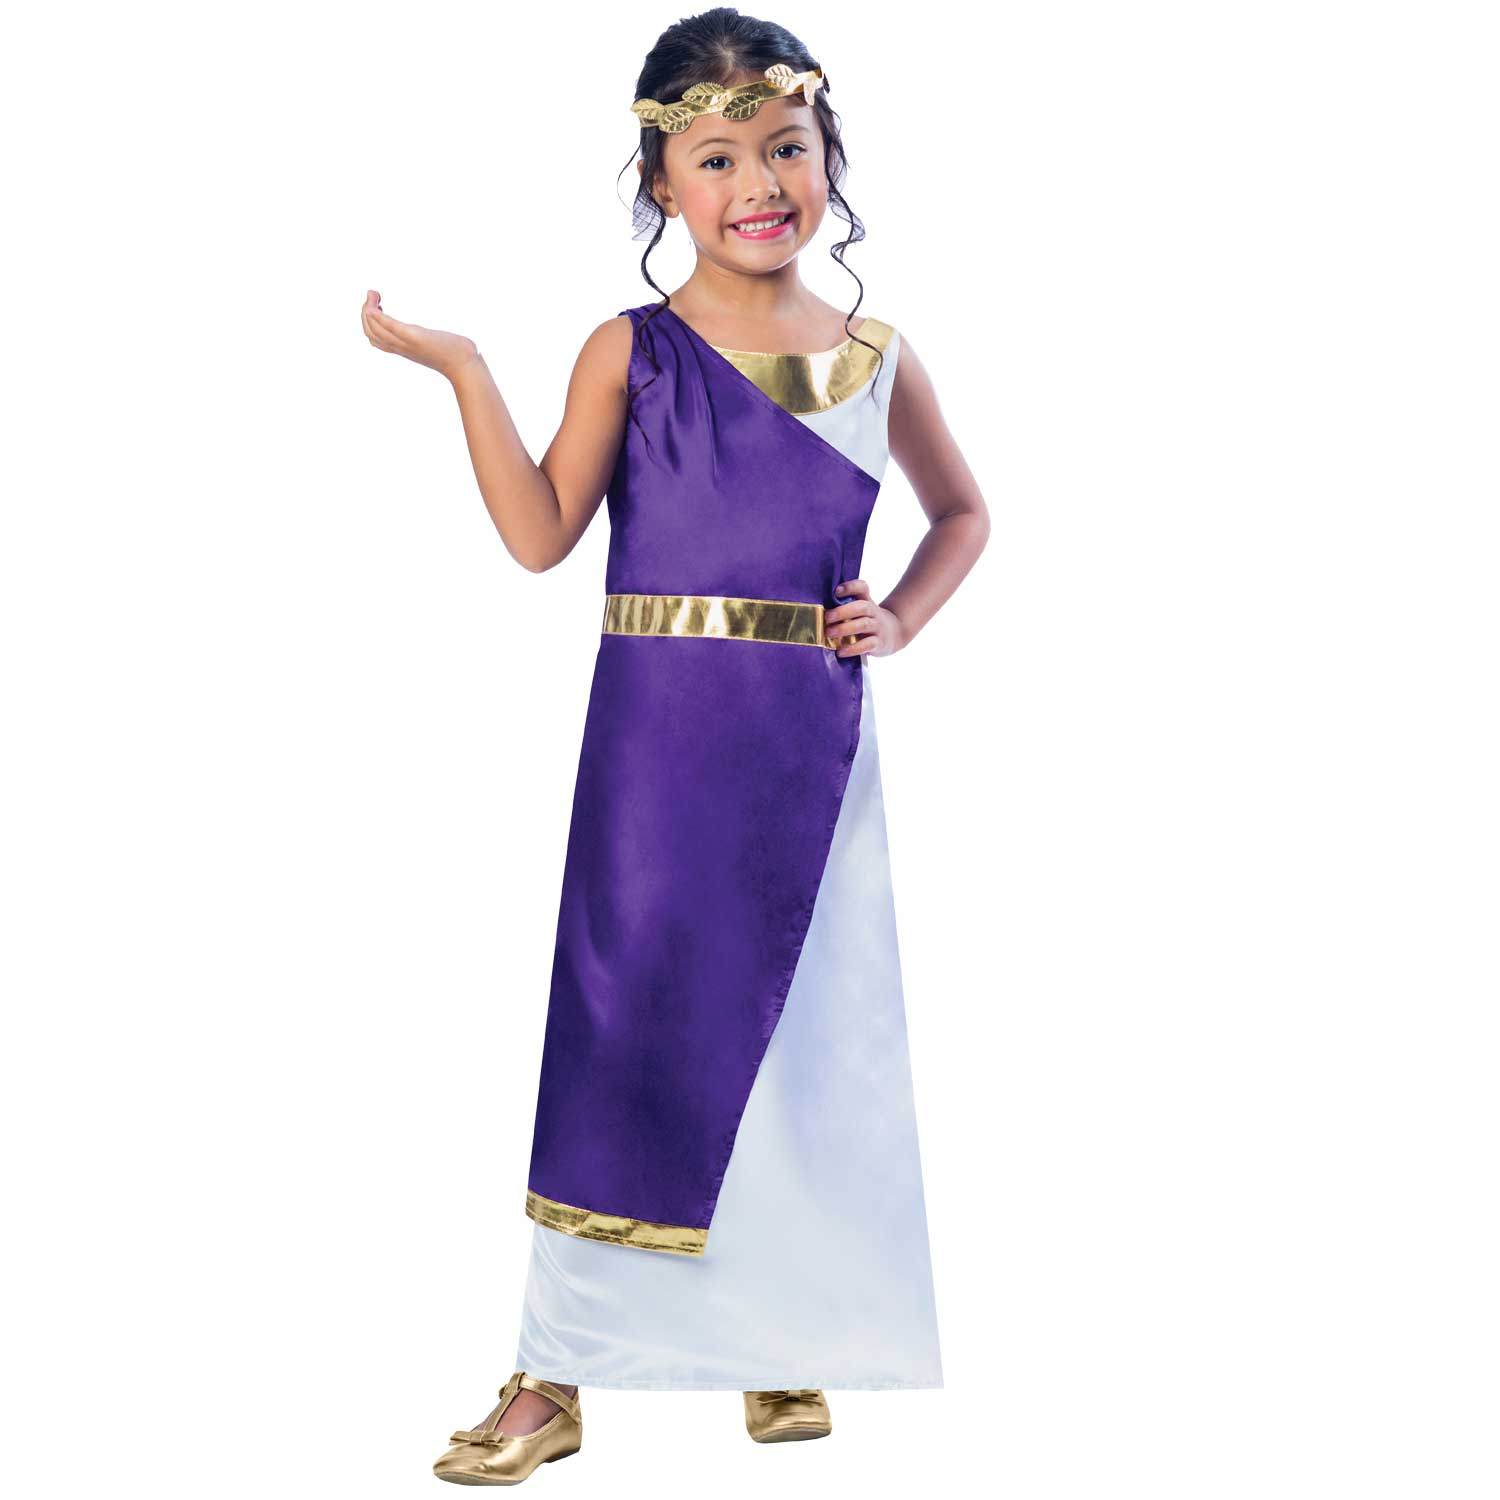 Roman Girl Costume - Age 7-8 Years - 1 PC : Amscan International